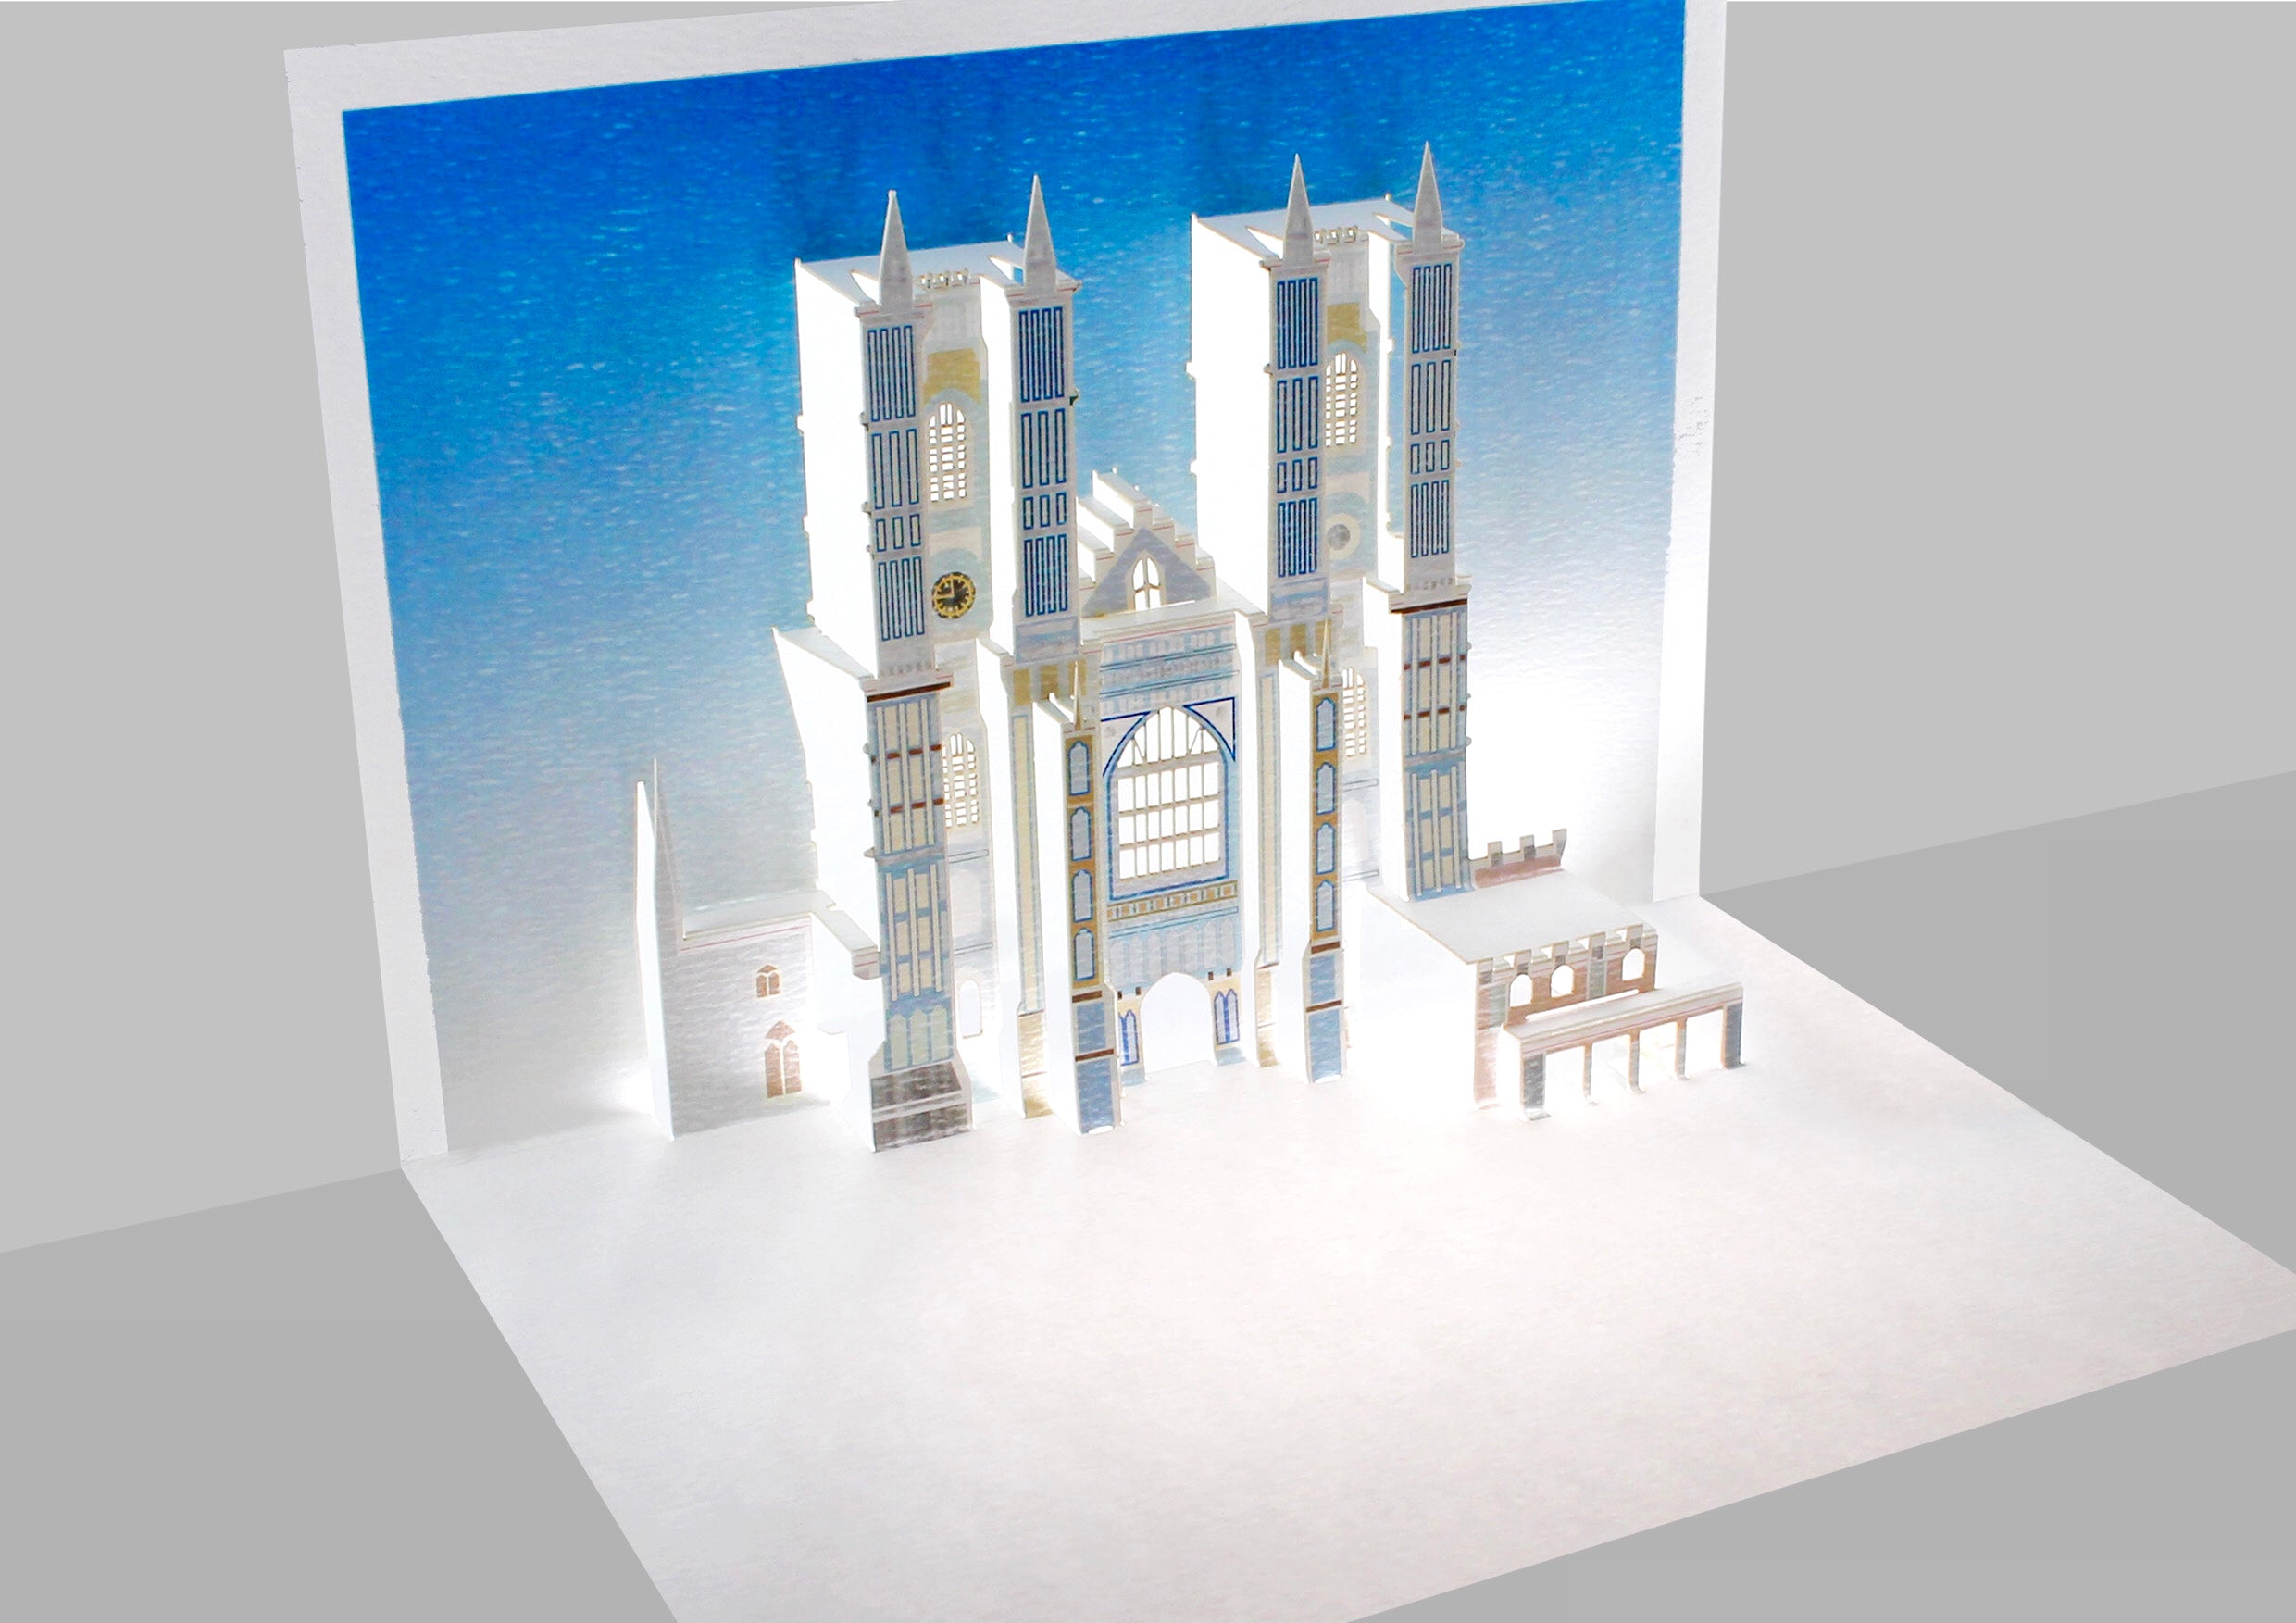 Westminster Abbey Iconic London Landmark 3D Pop Up Birthday Greeting Card